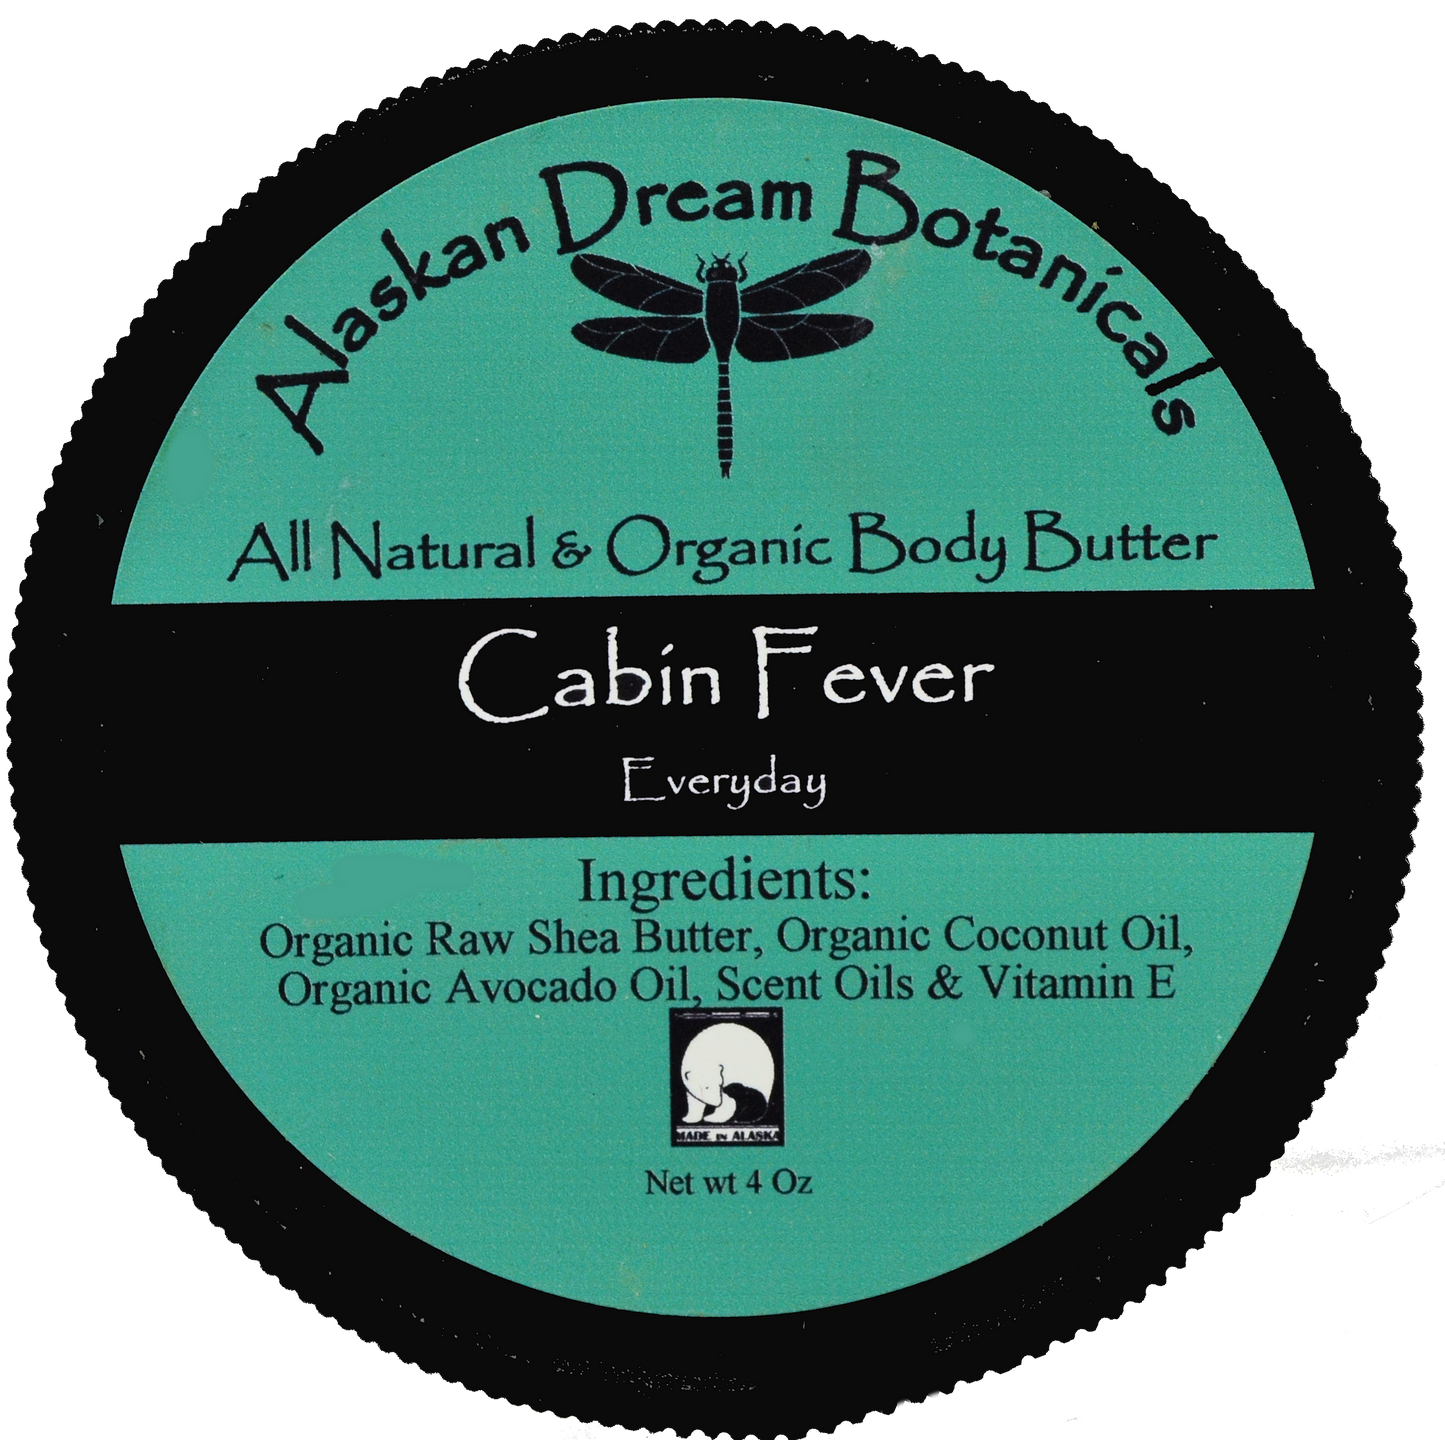 Cabin Fever Everyday Body Butter - Alaskan Dream Botanicals